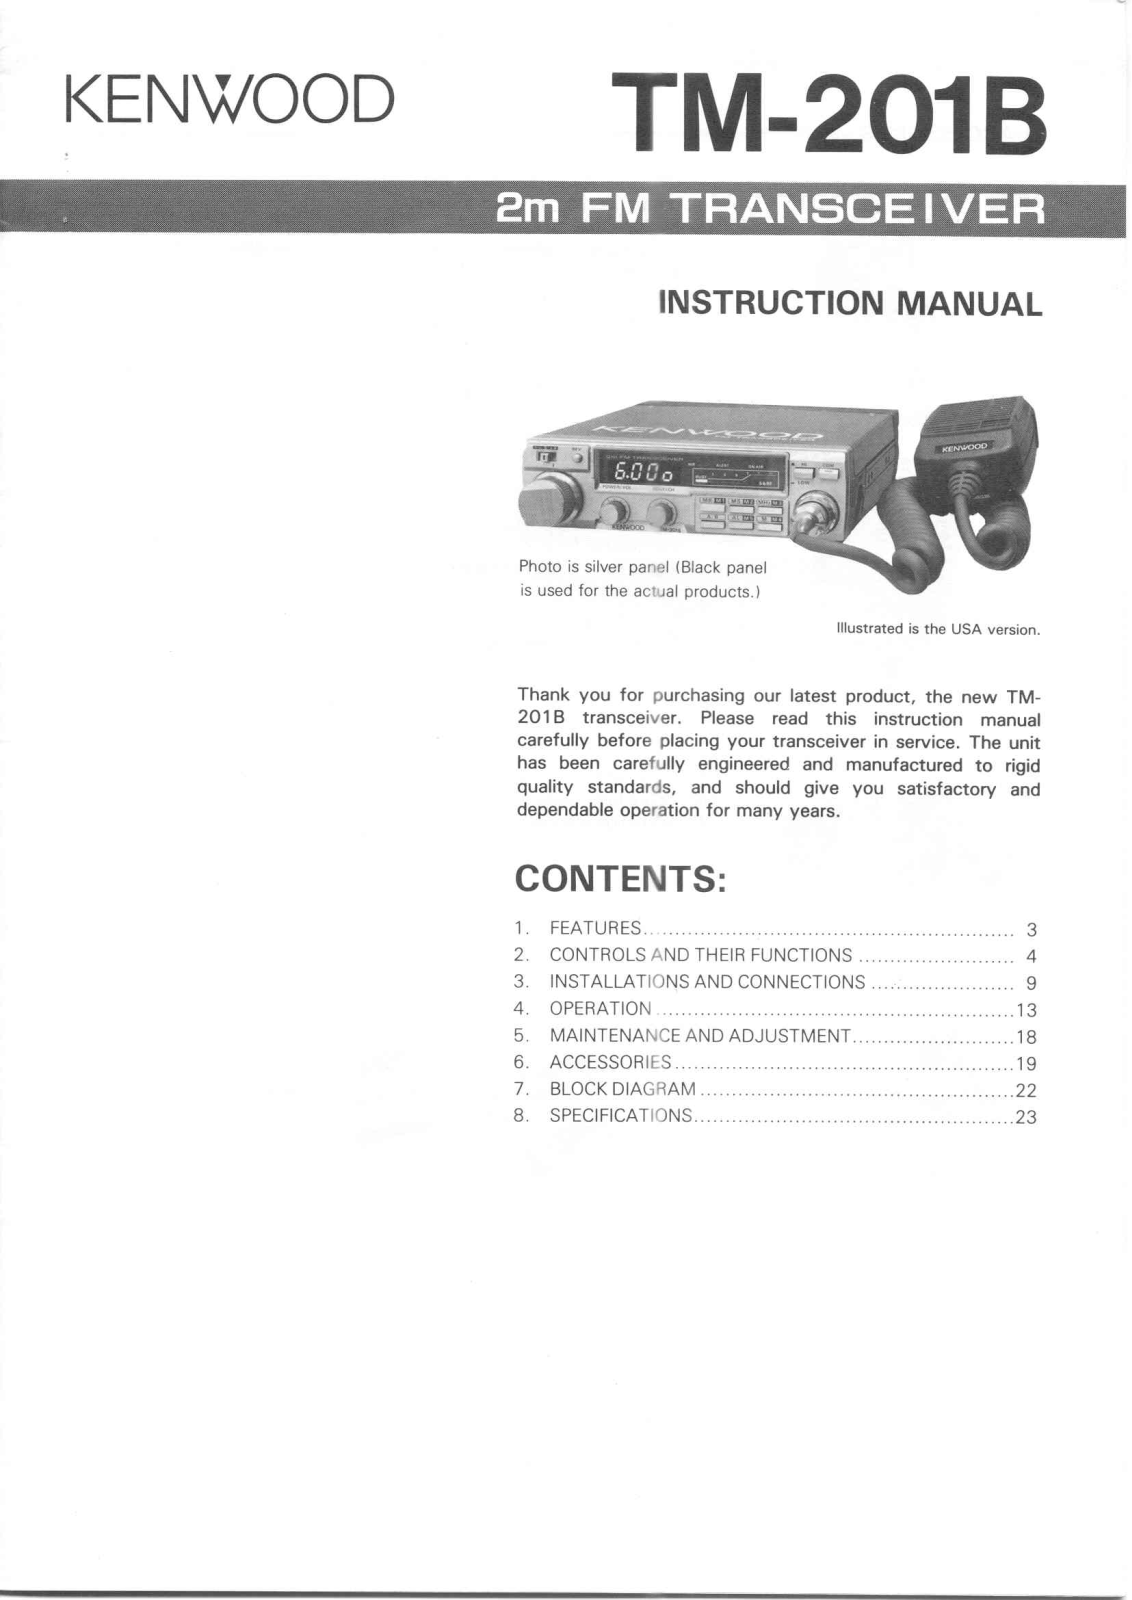 Kenwood TM-201B Owner's Manual